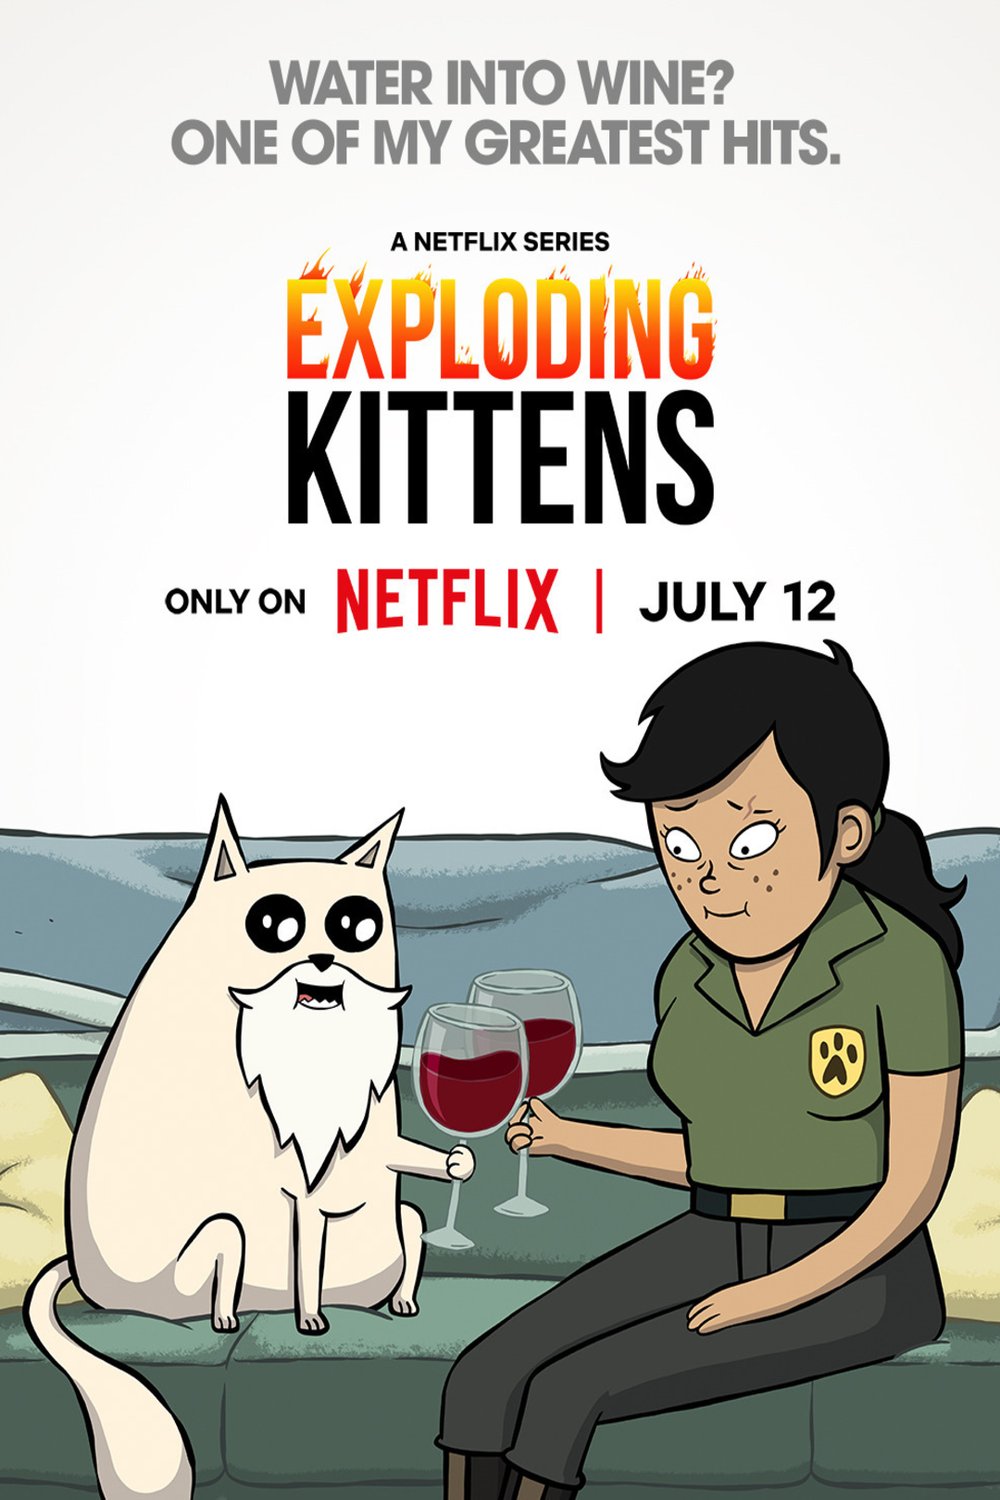 Poster of the movie Exploding Kittens